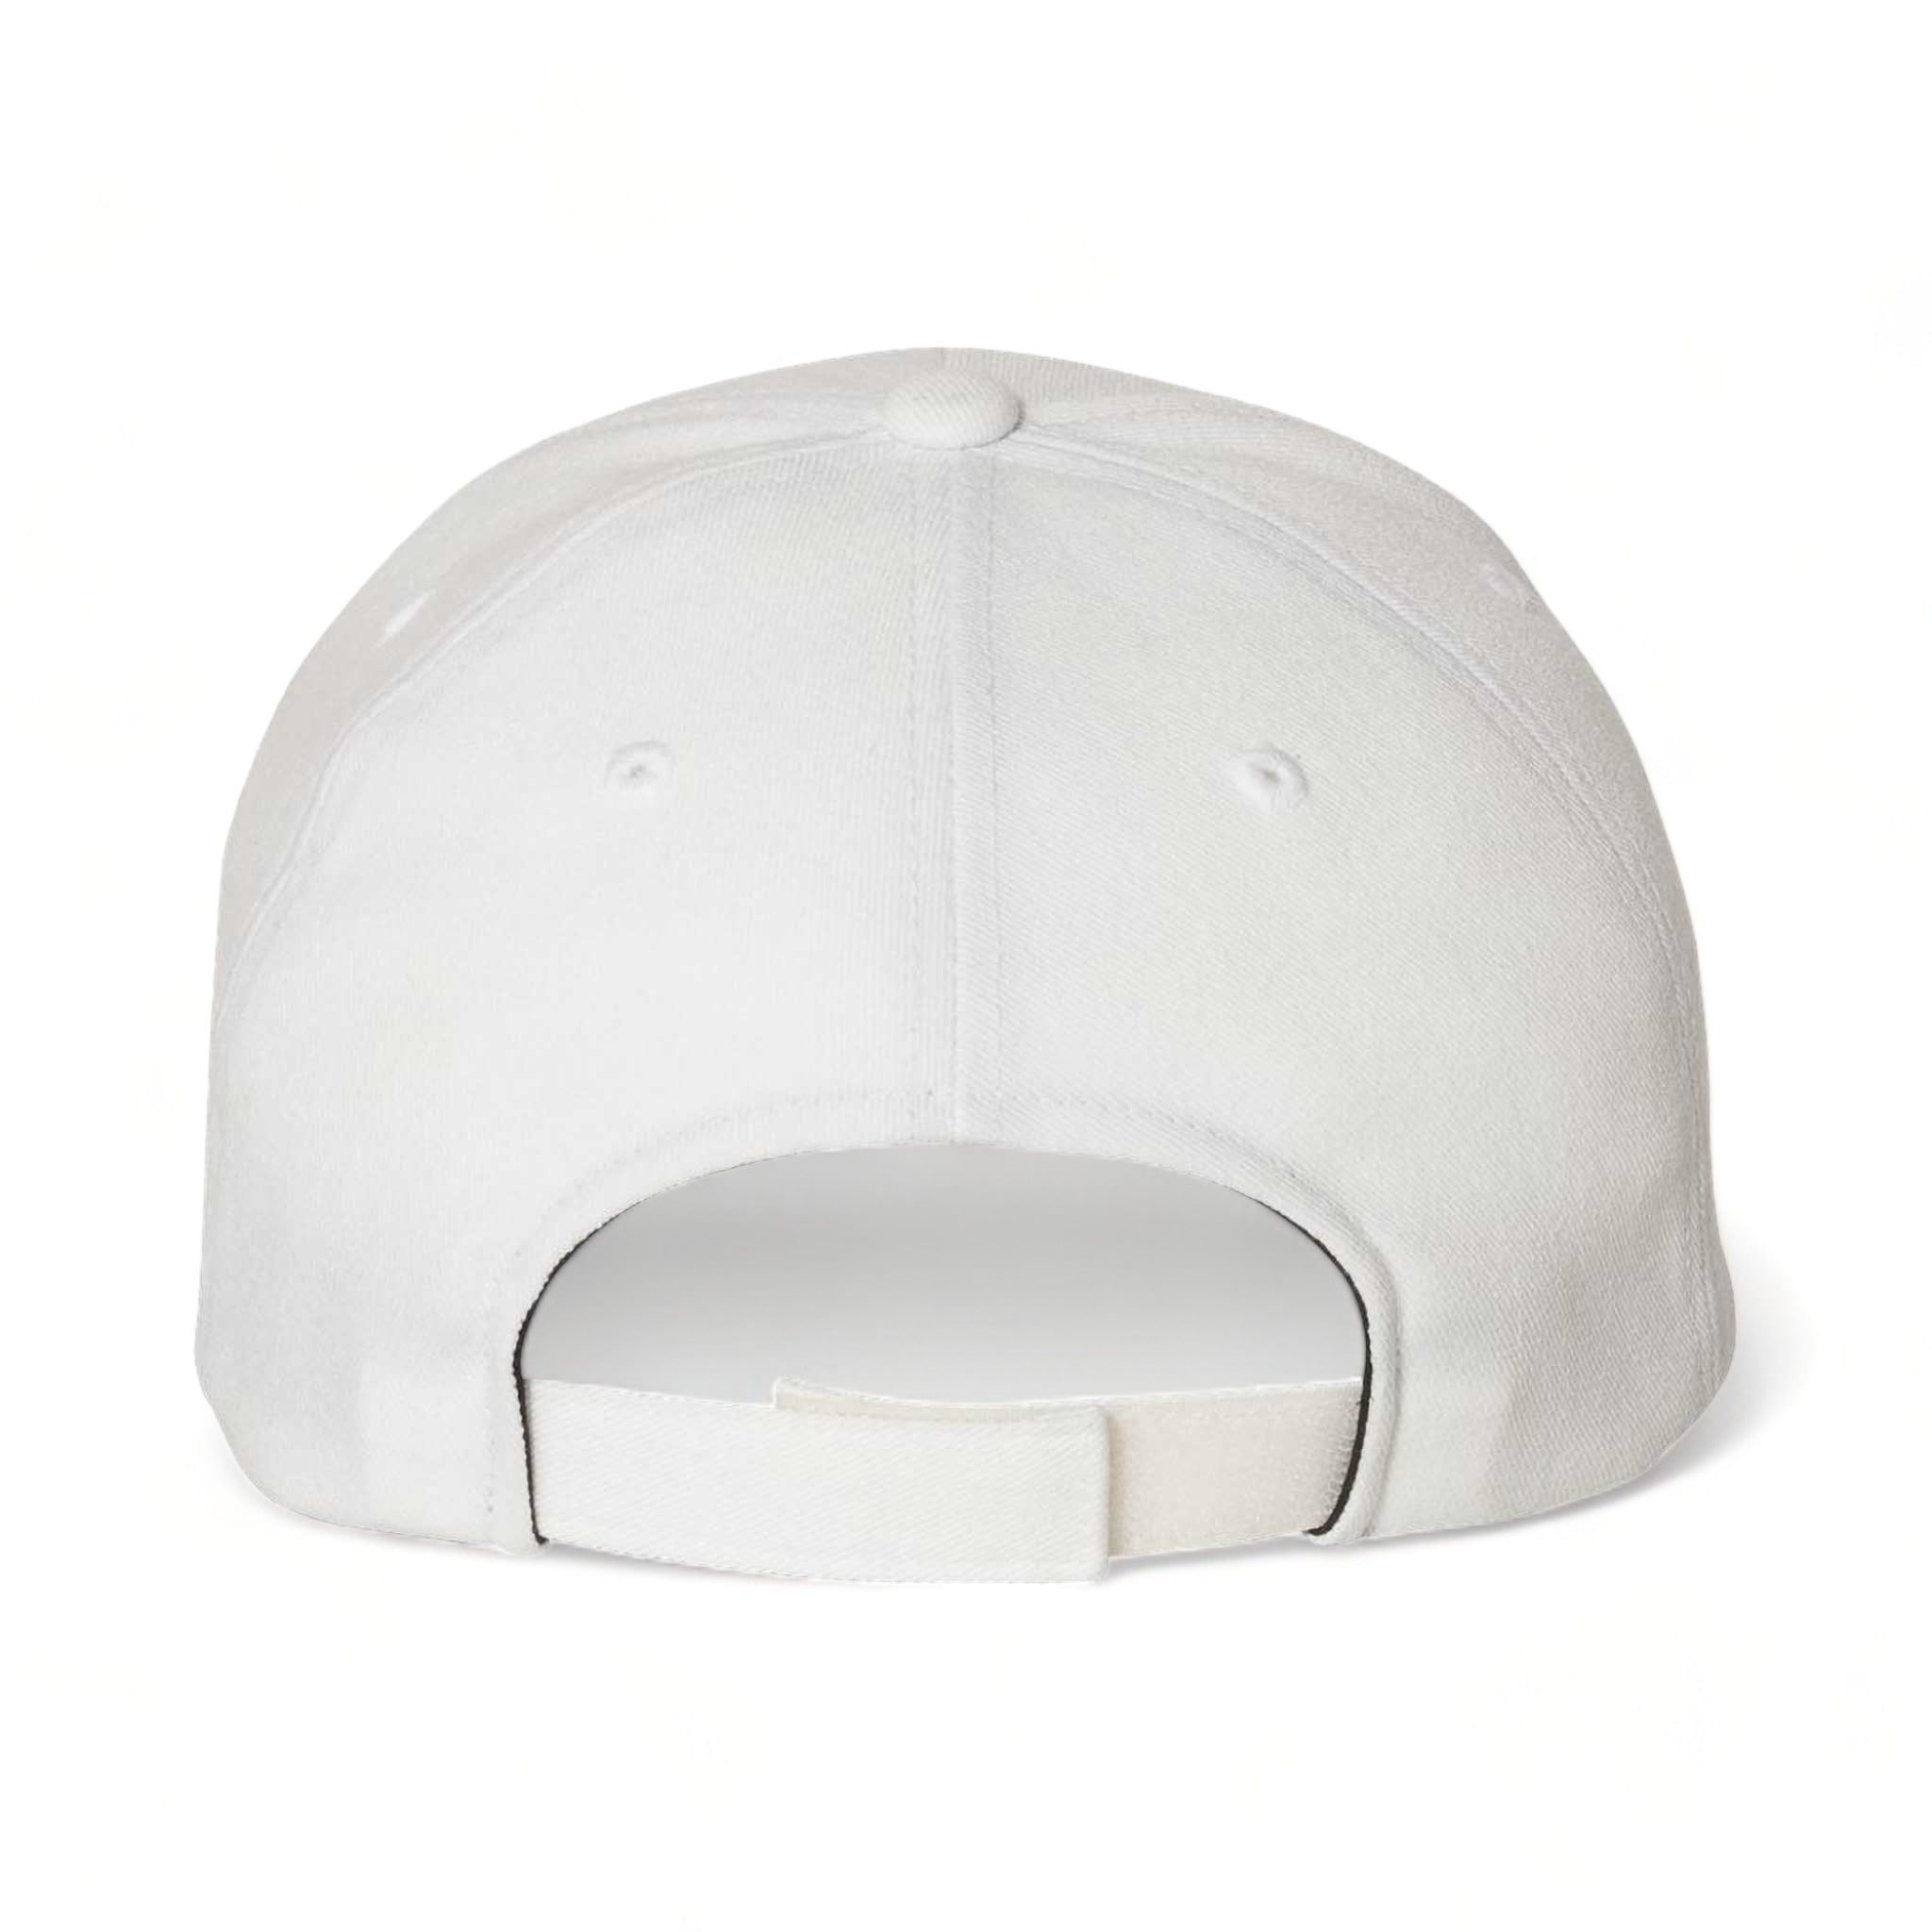 Back view of Flexfit 110C custom hat in white